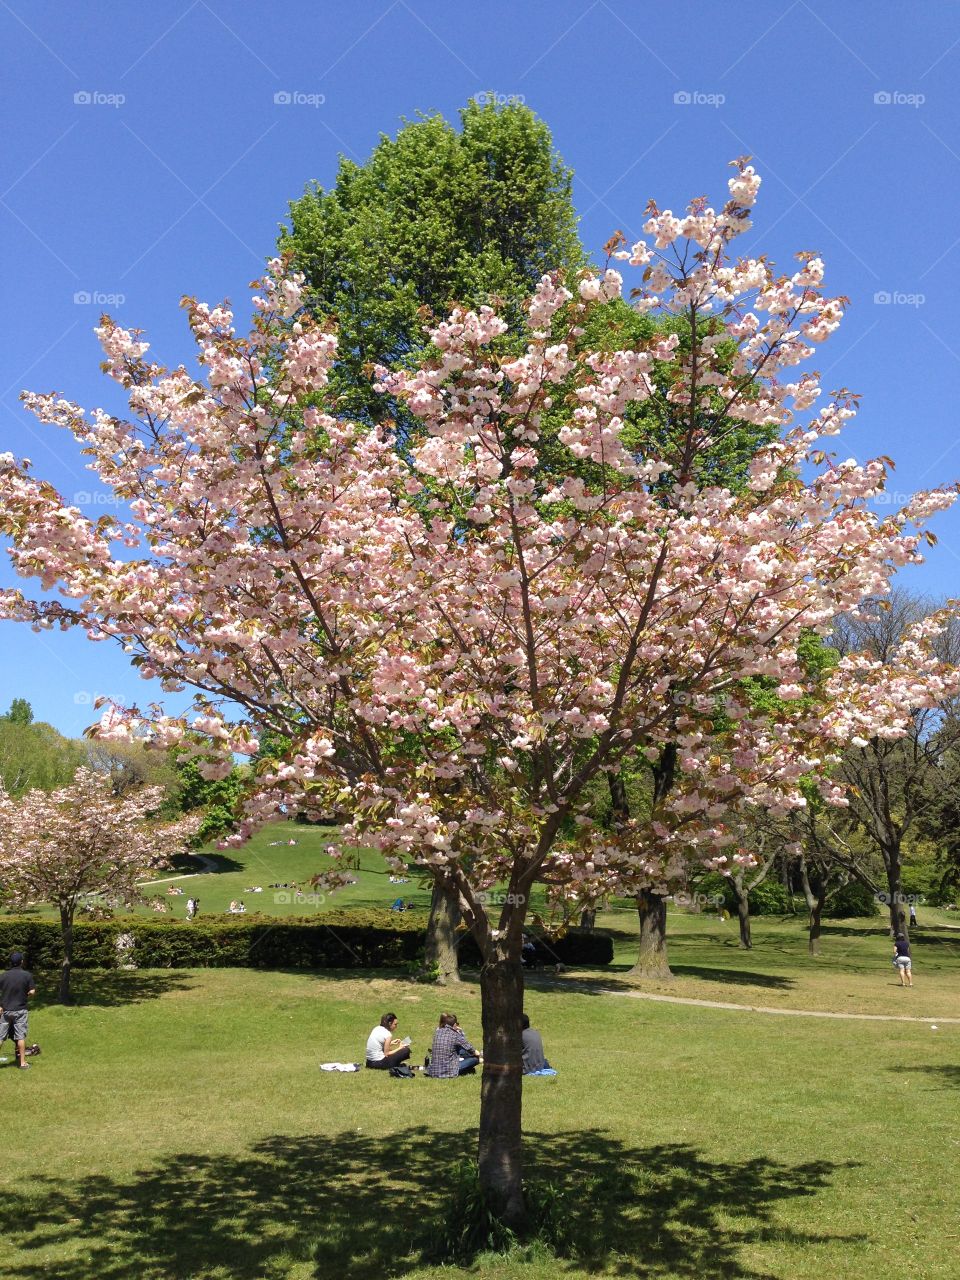 Tree, Flower, Cherry, Park, Landscape